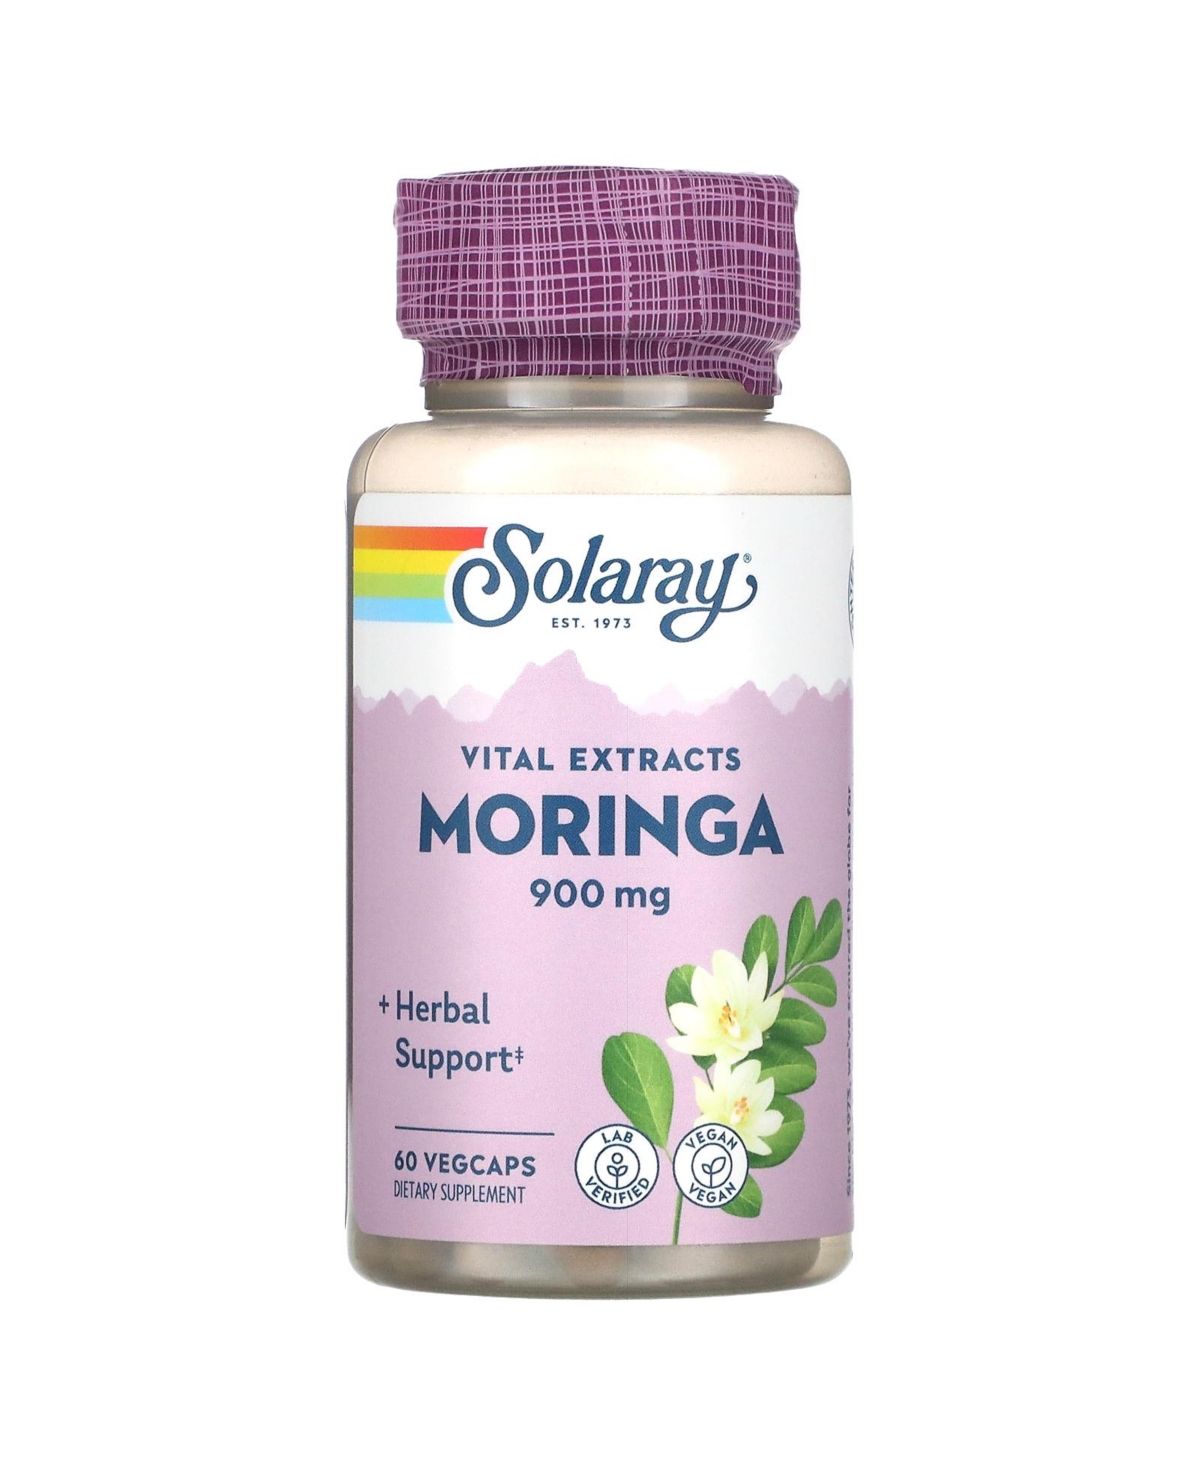 Moringa 900 mg - 60 Vegcaps (450 mg per Capsule) - Assorted Pre-pack (See Table